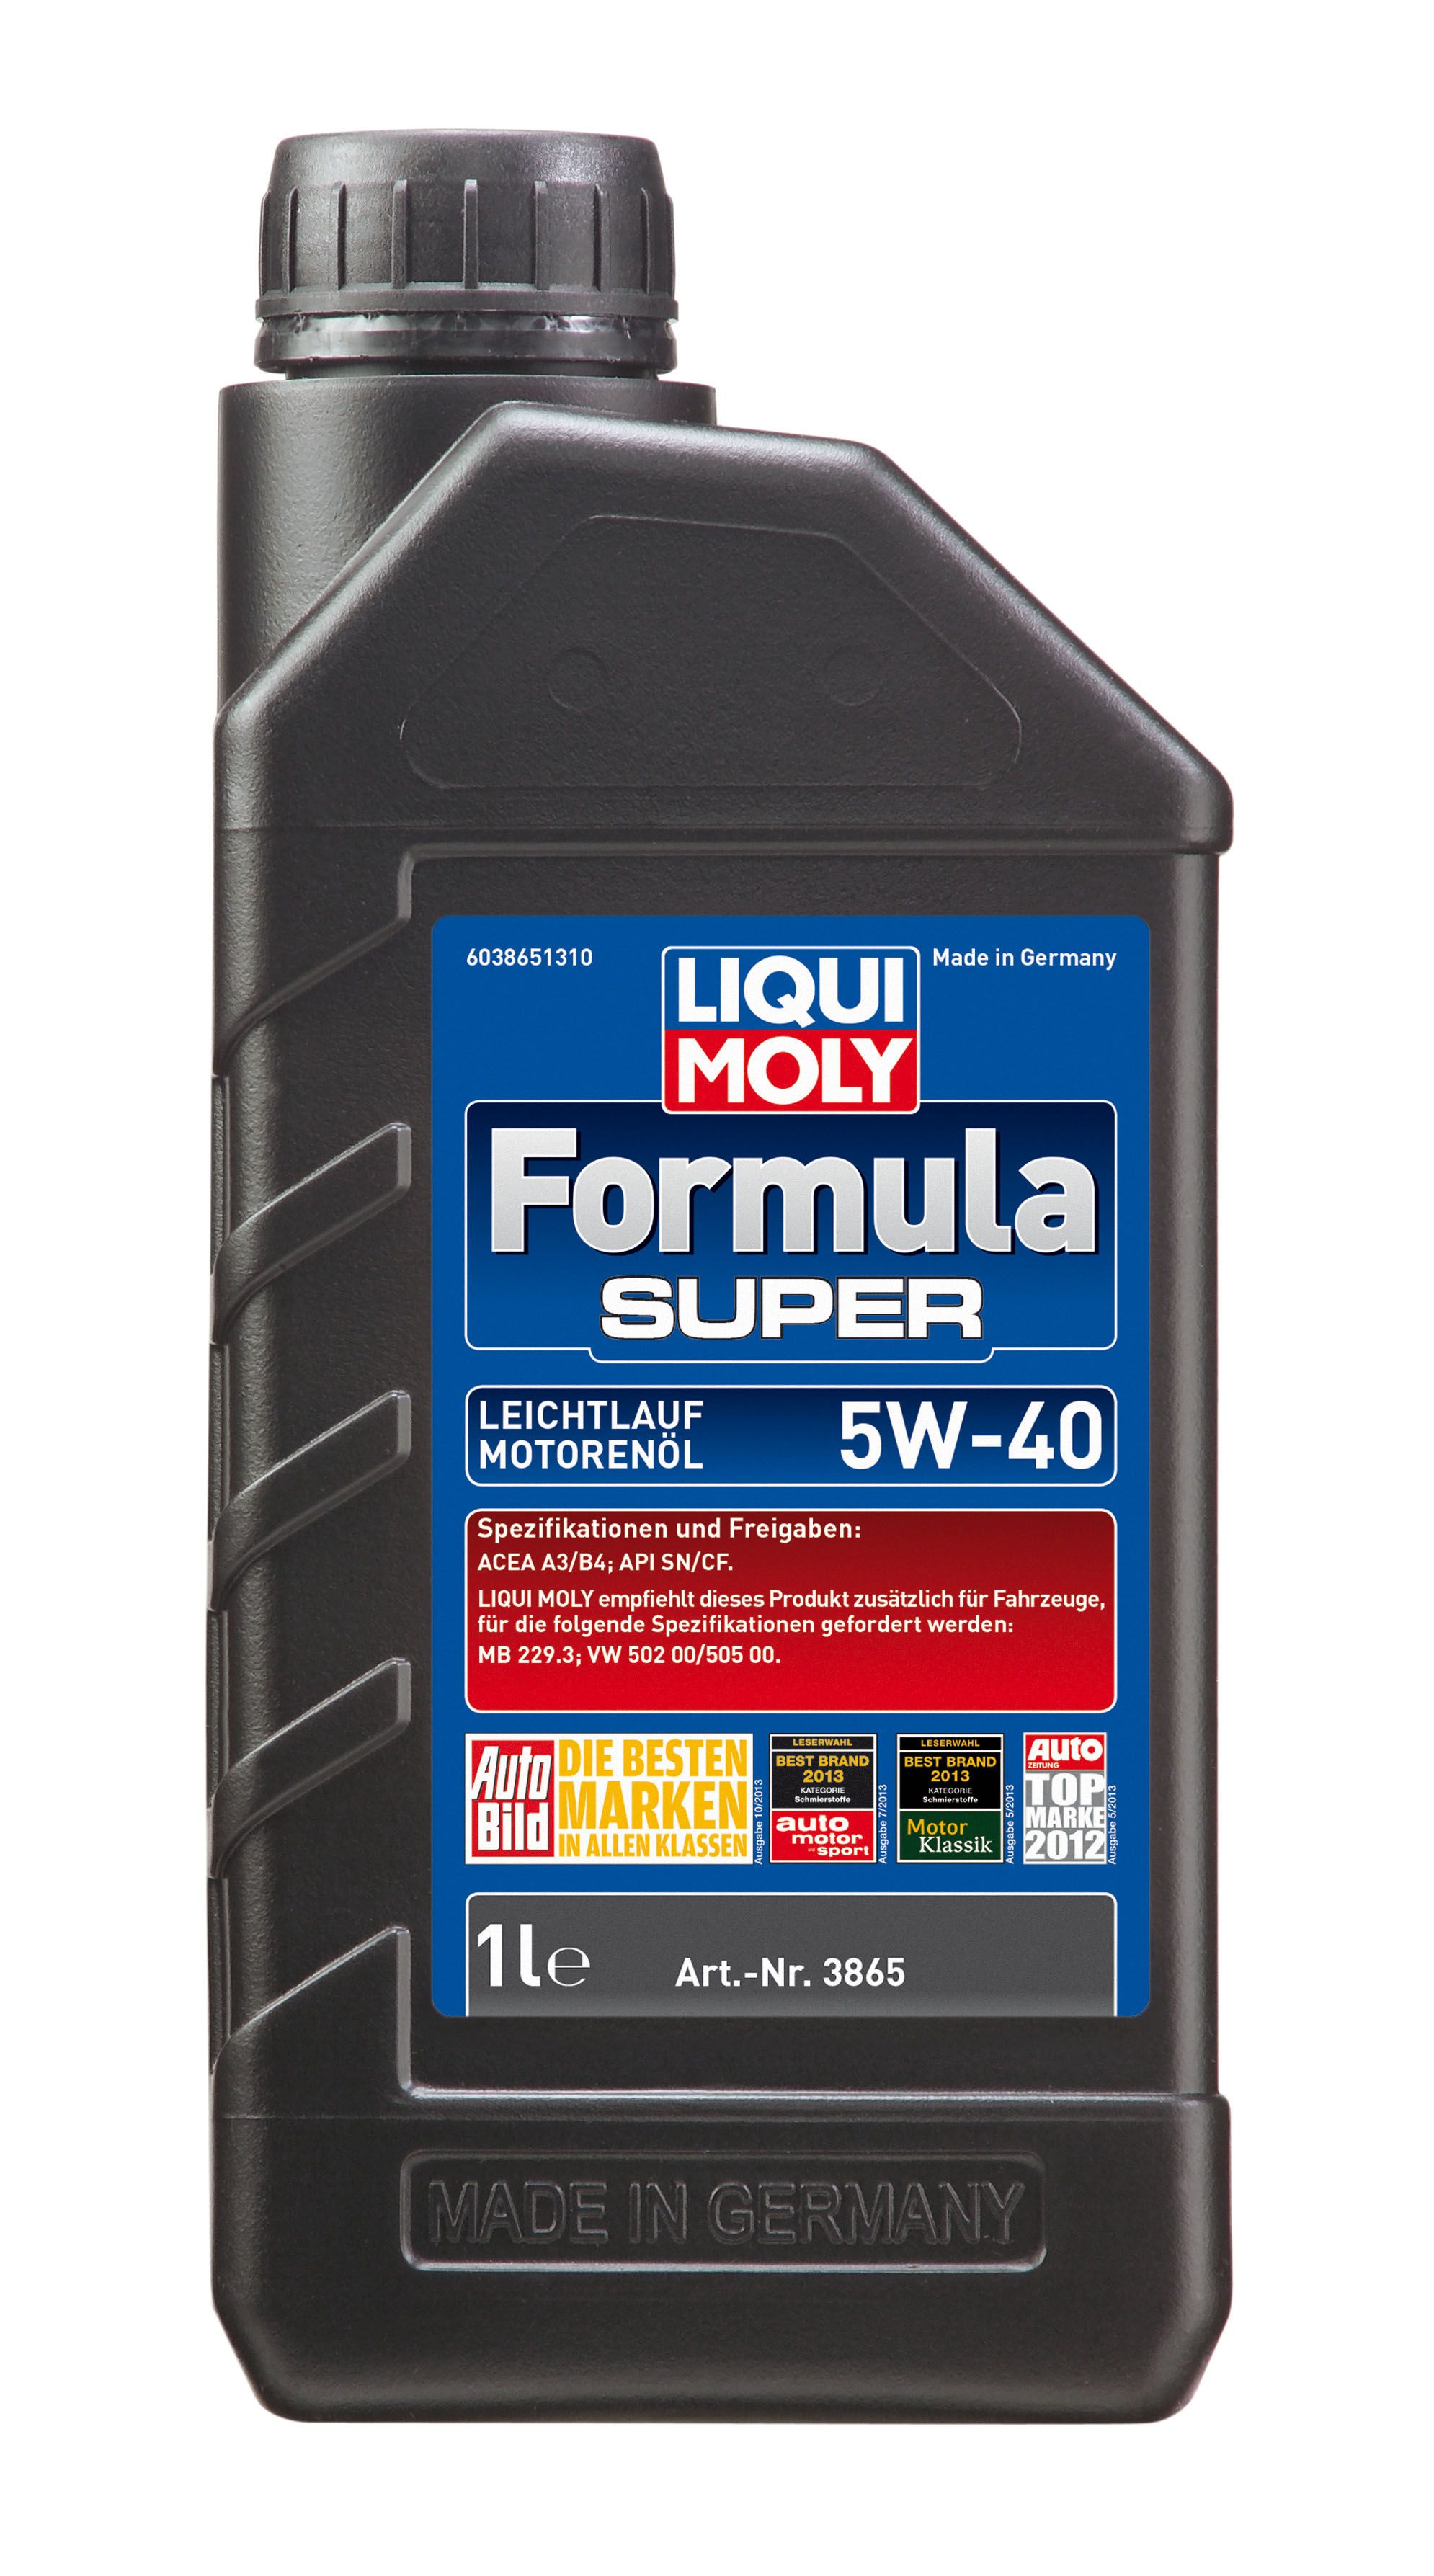 Formula Super 5W-40 - Formula Super 5W-40